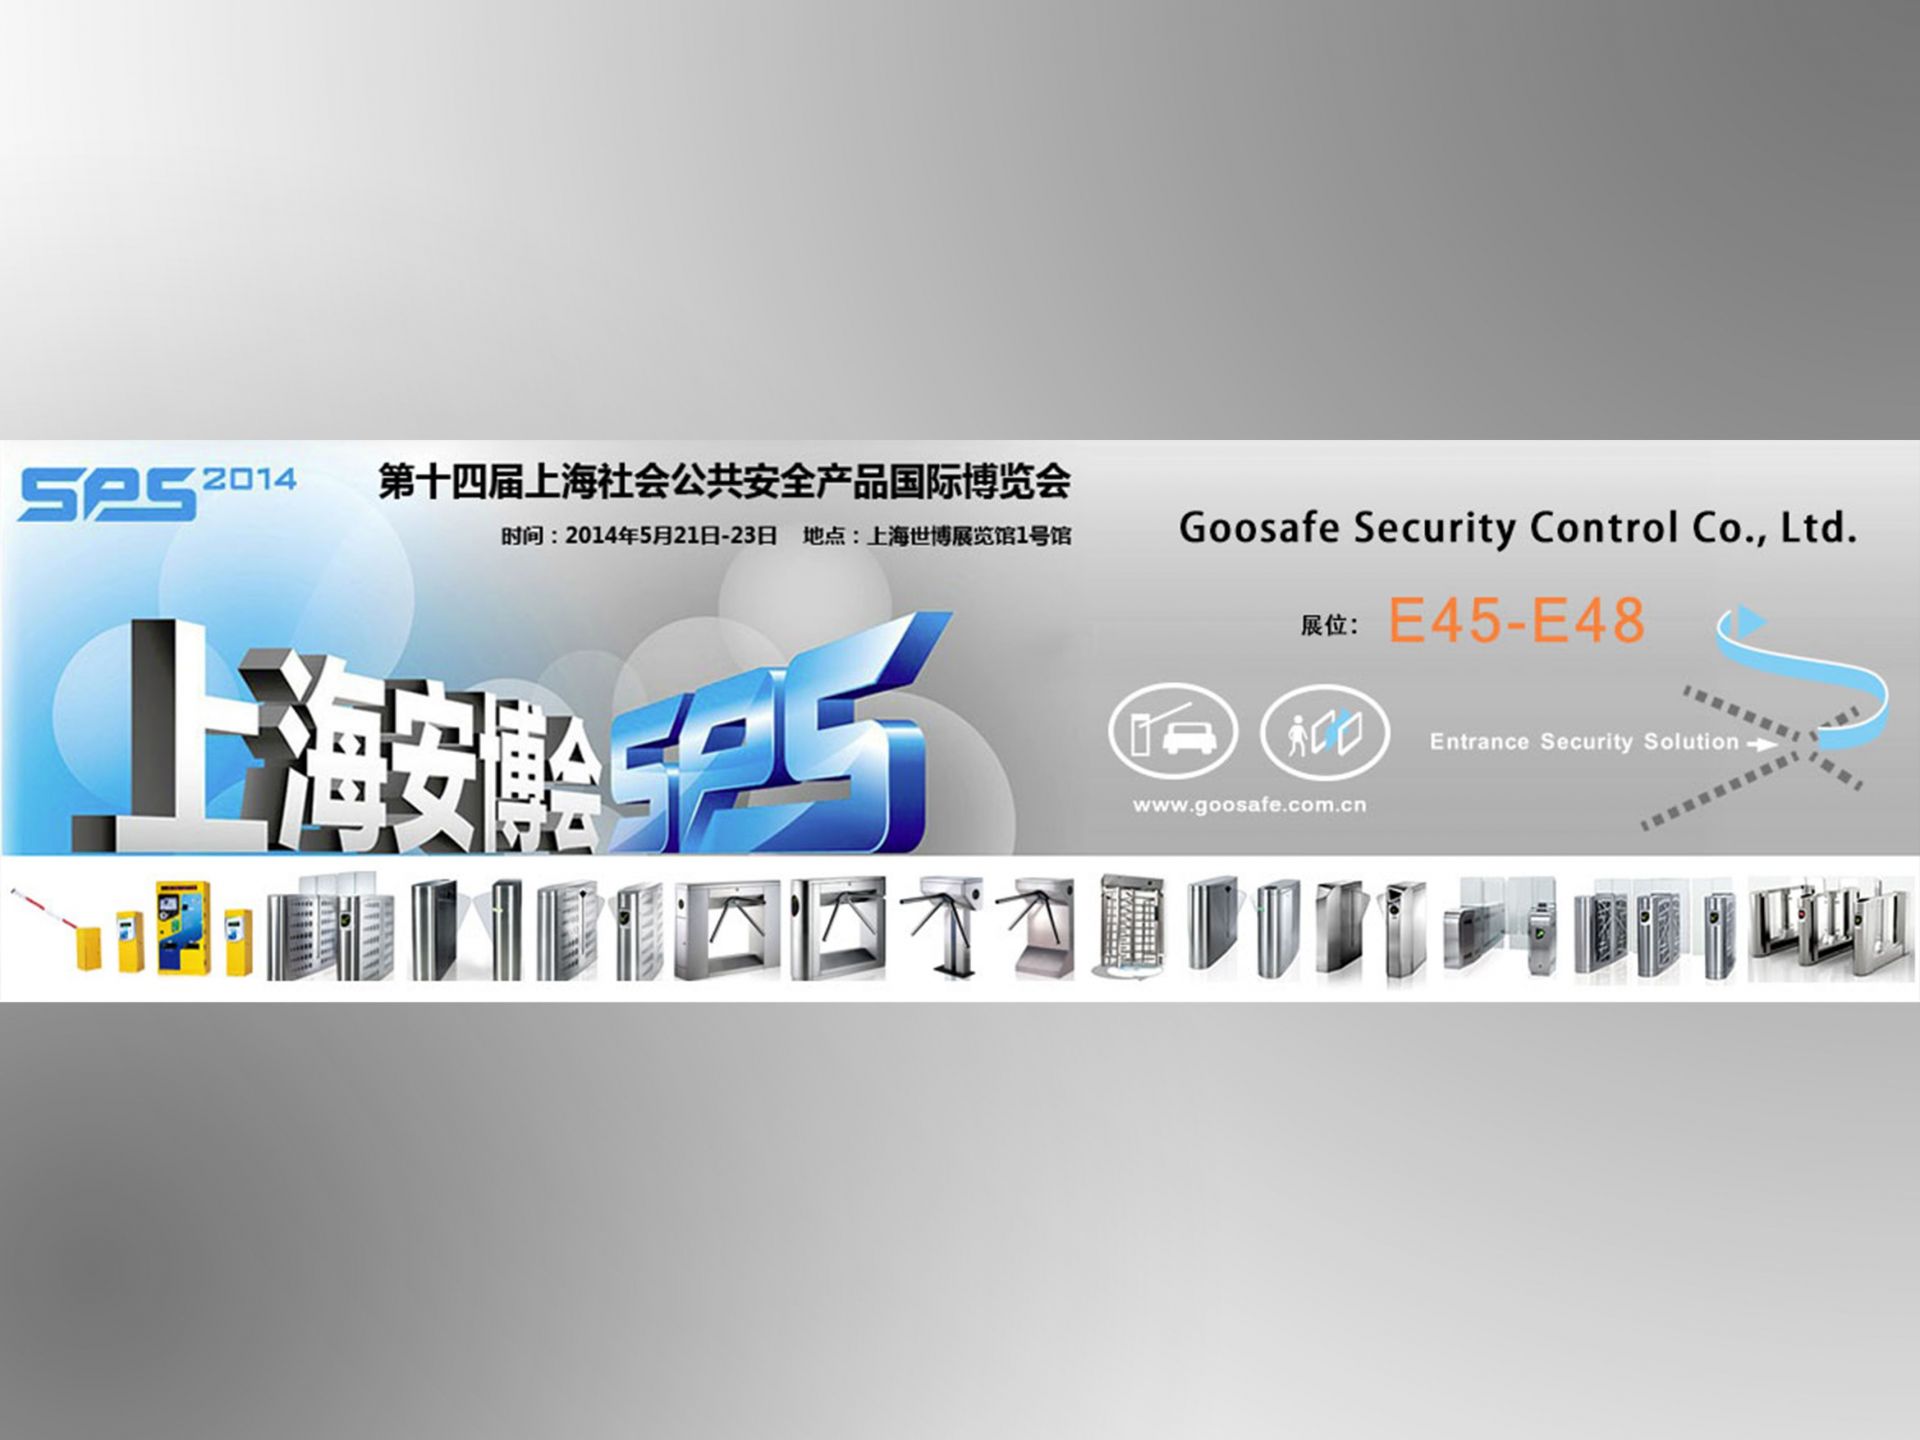 GOOSAFE 2014 The 14th Shanghai Security Expo